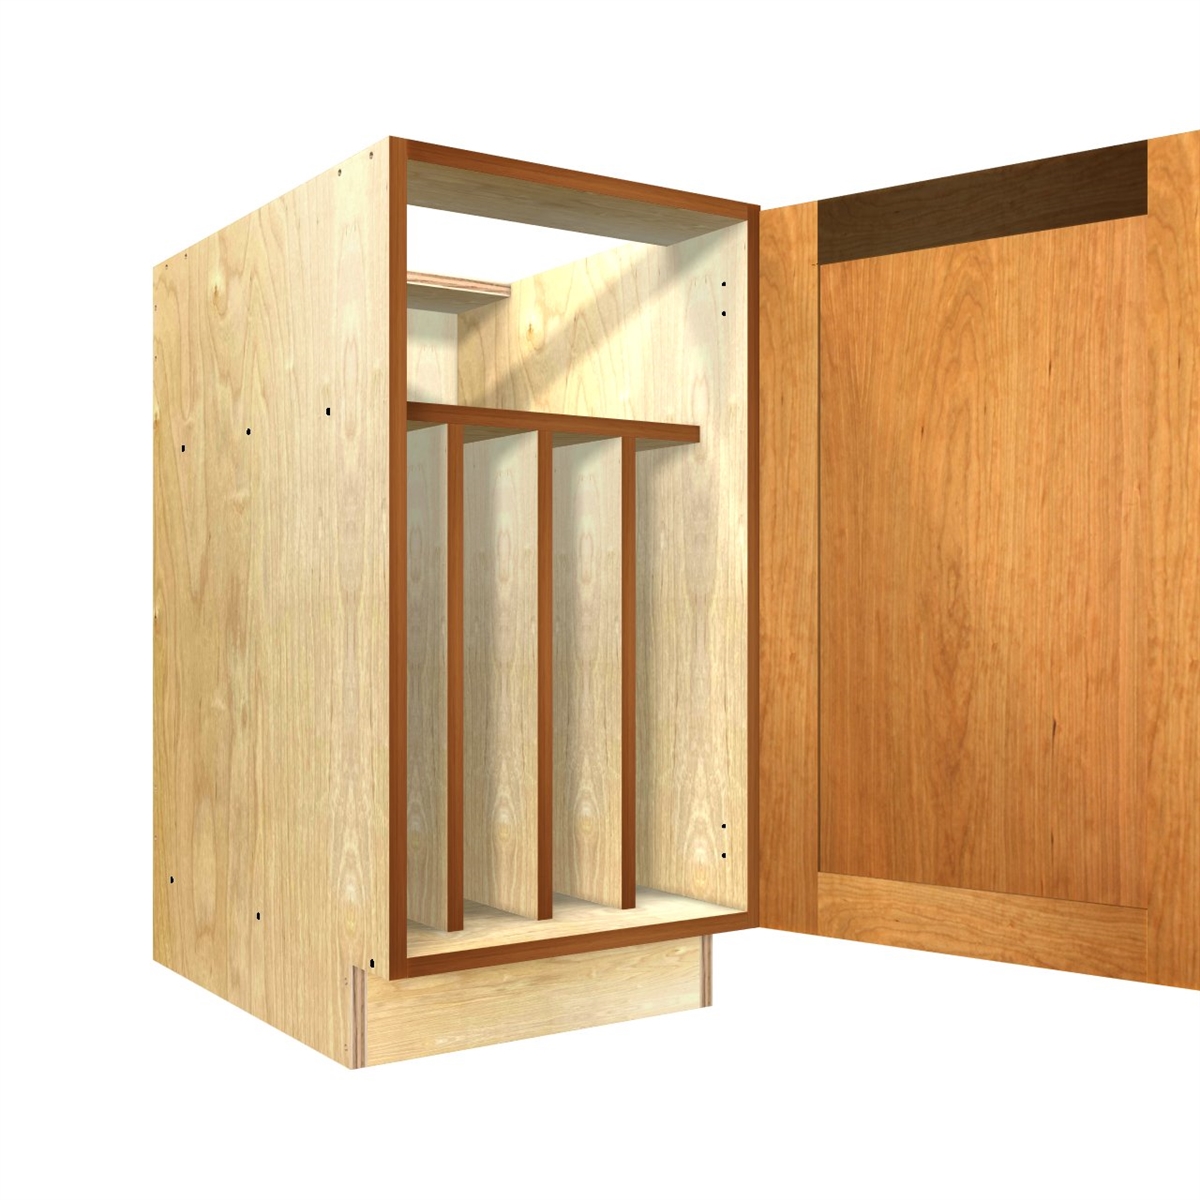 Wooden Vertical Cabinet Tray Divider & Organizer